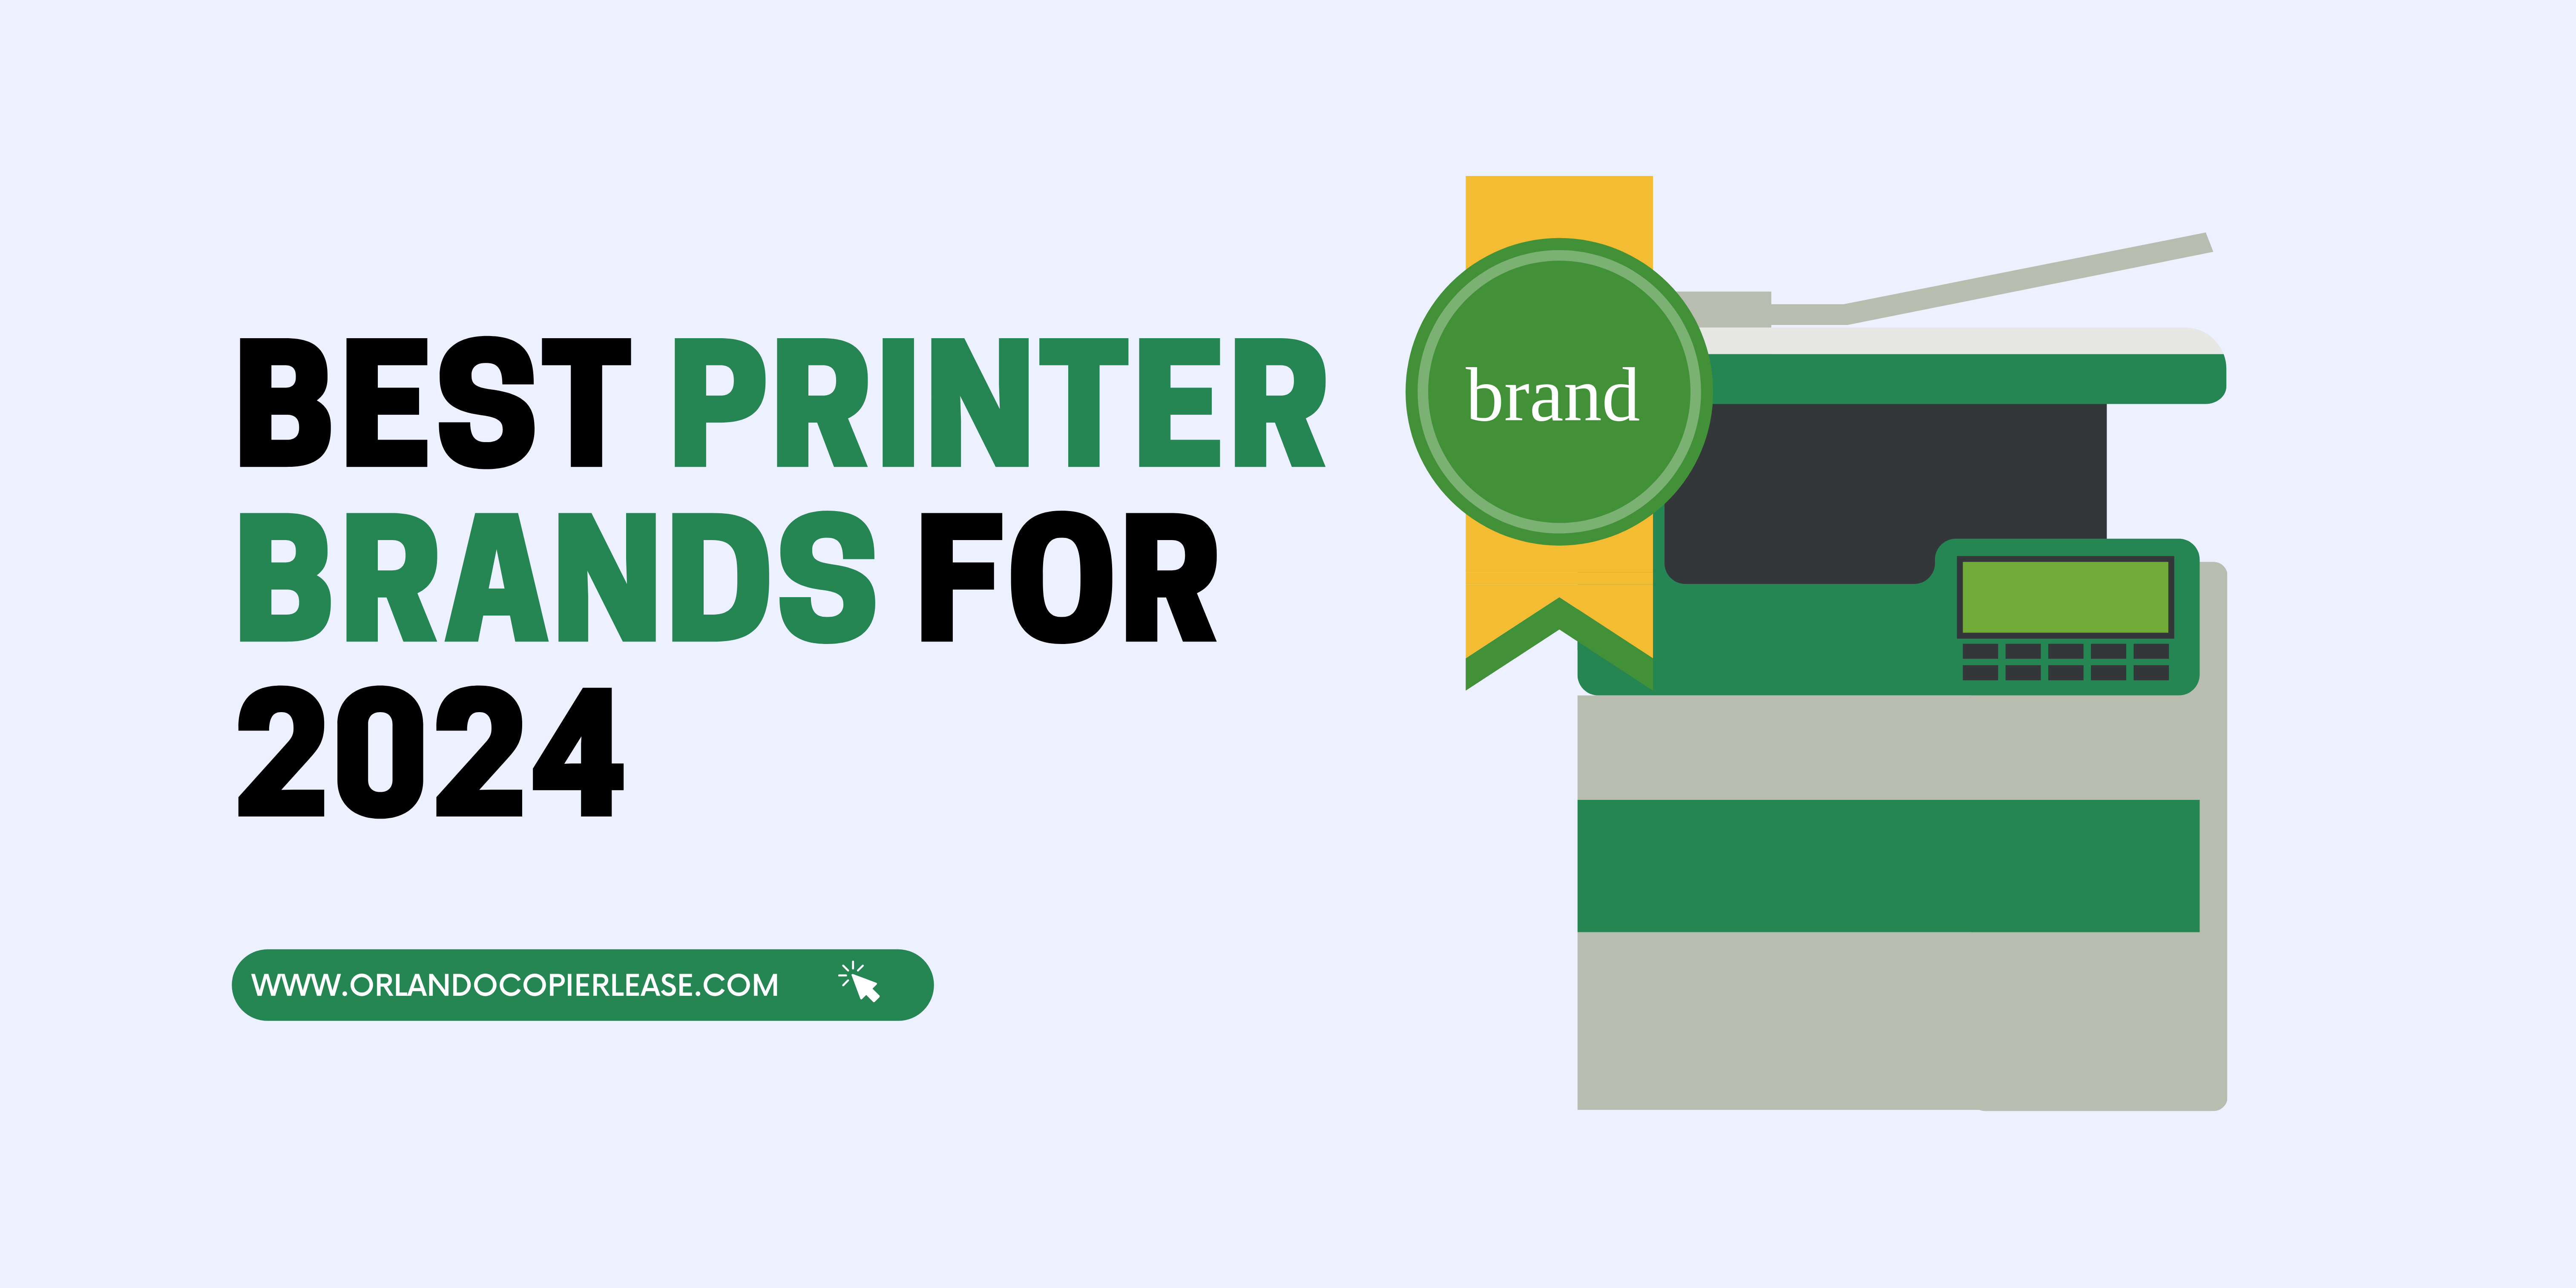 Best Printer Brands for 2024